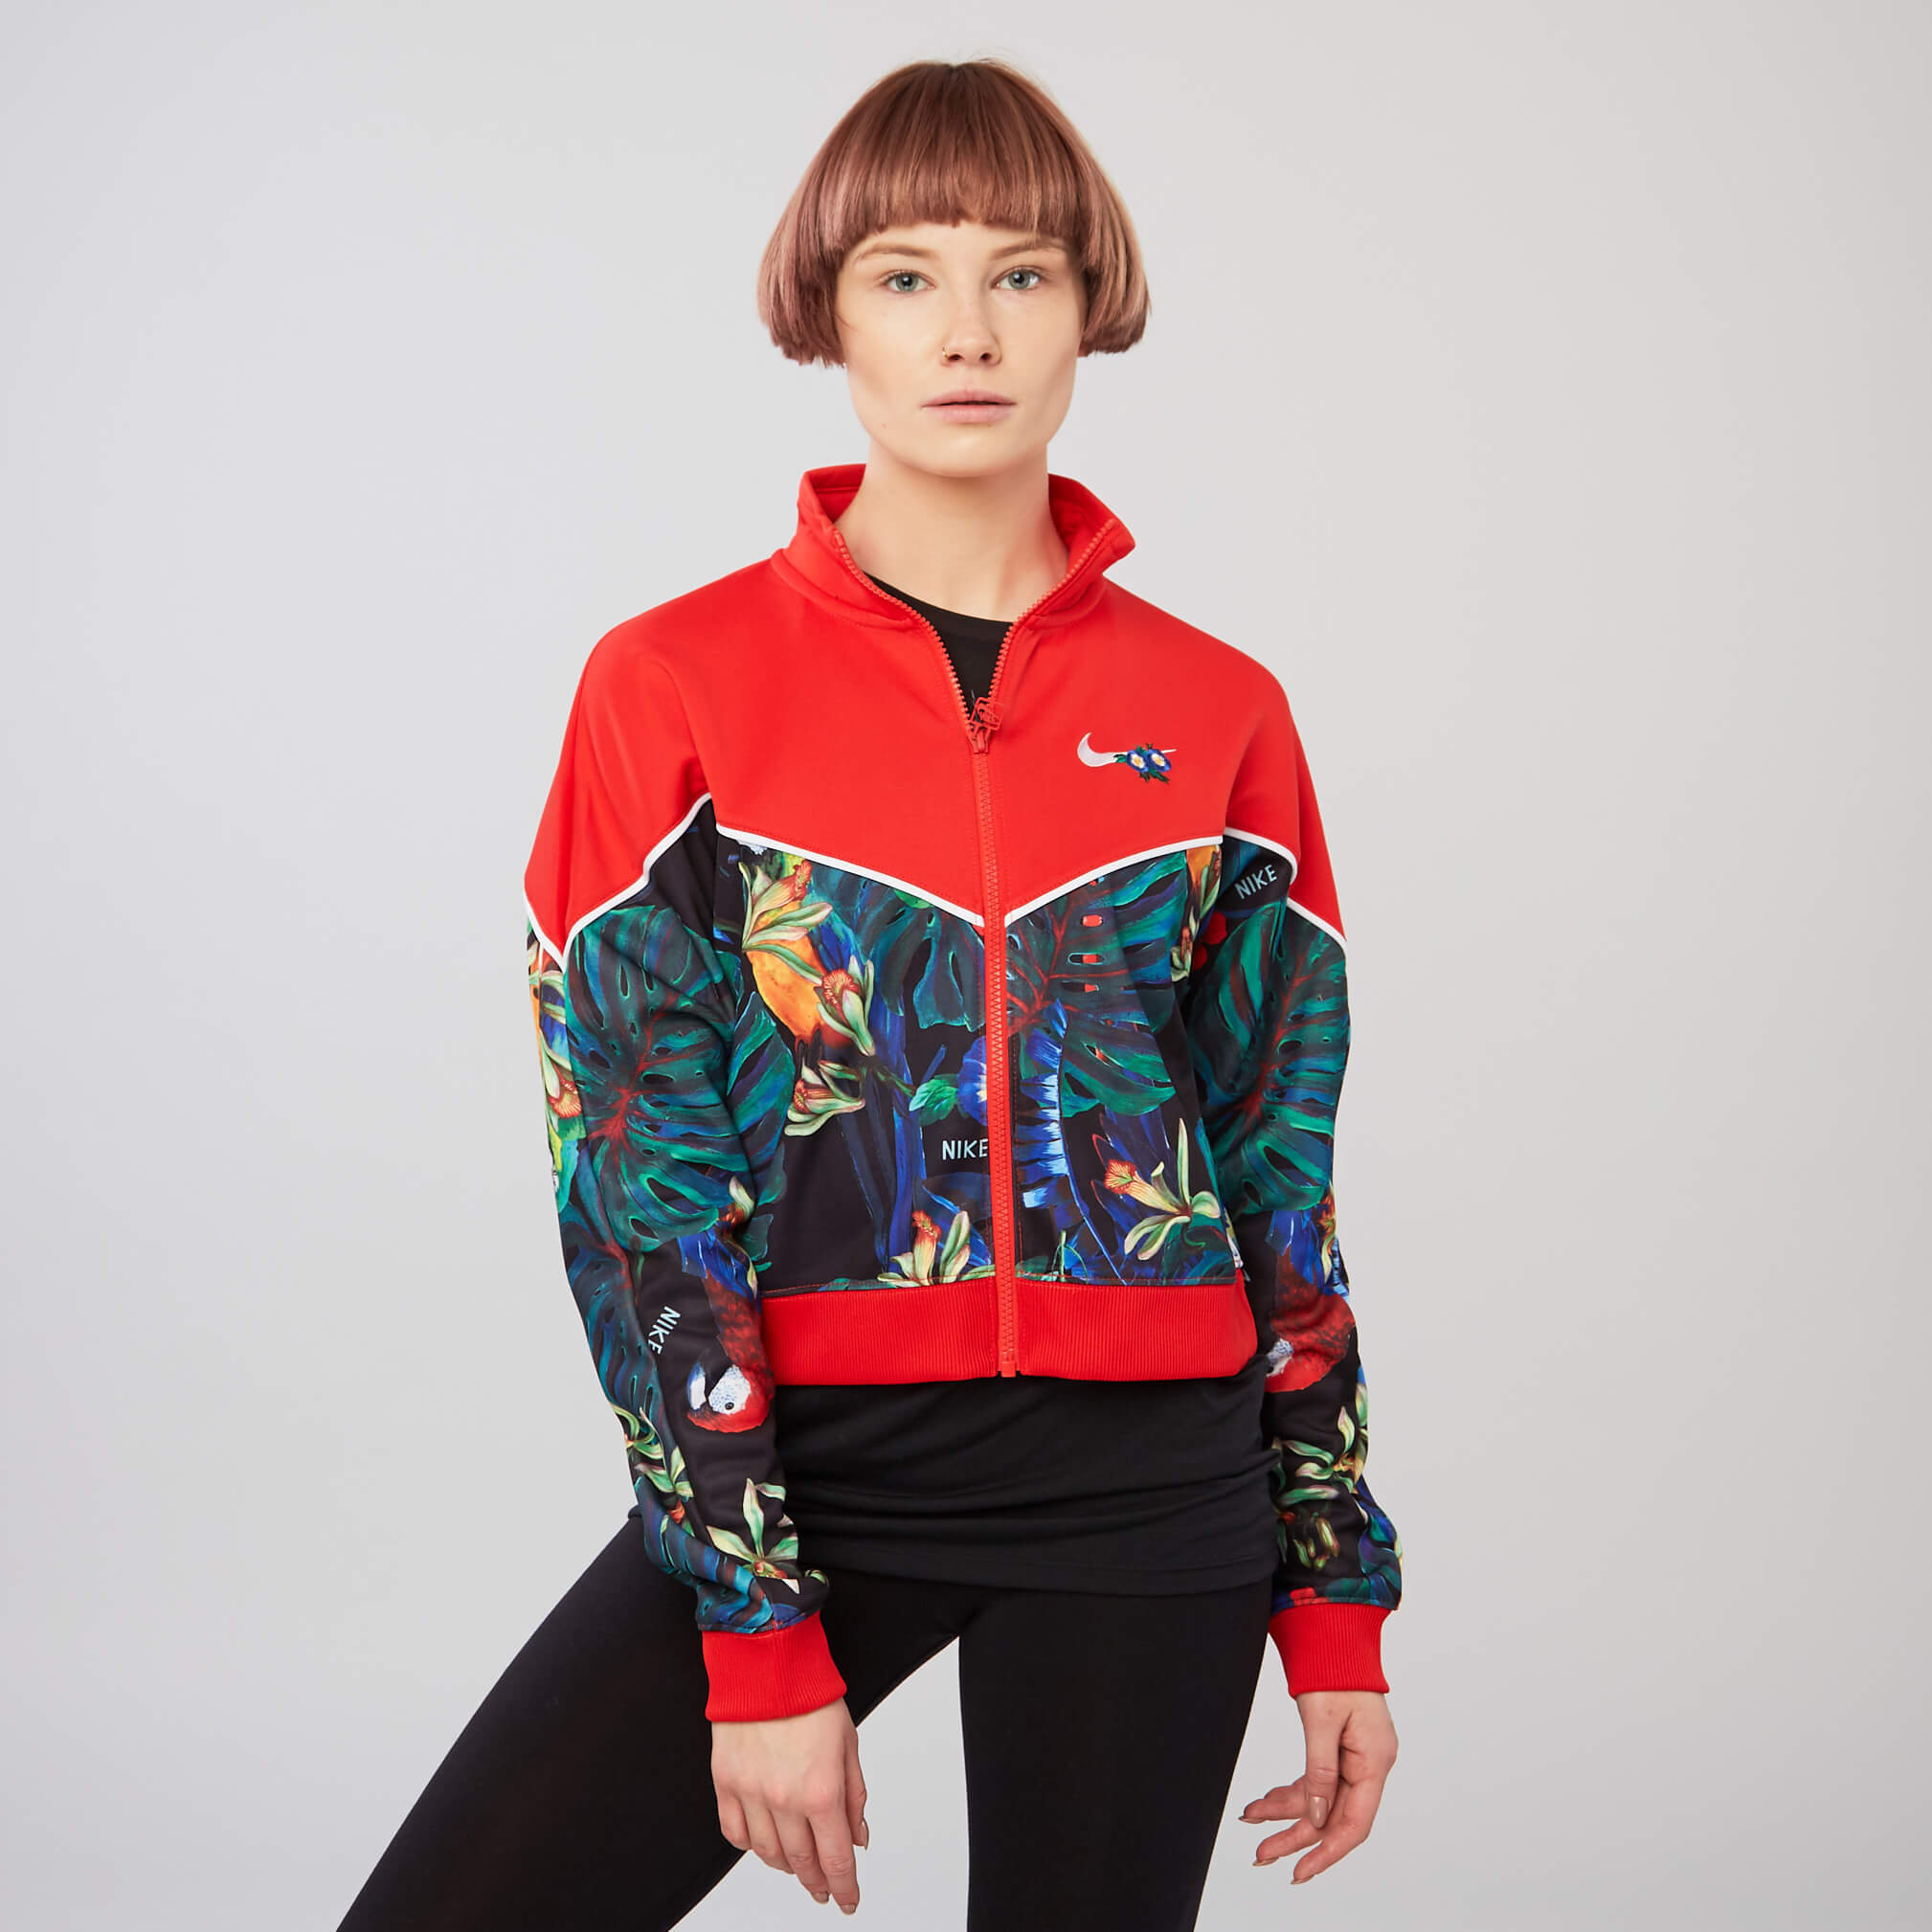 Nike Women’s Red Tropical Hyper Femme Print Tracksuit Jacket AQ9726 Nike